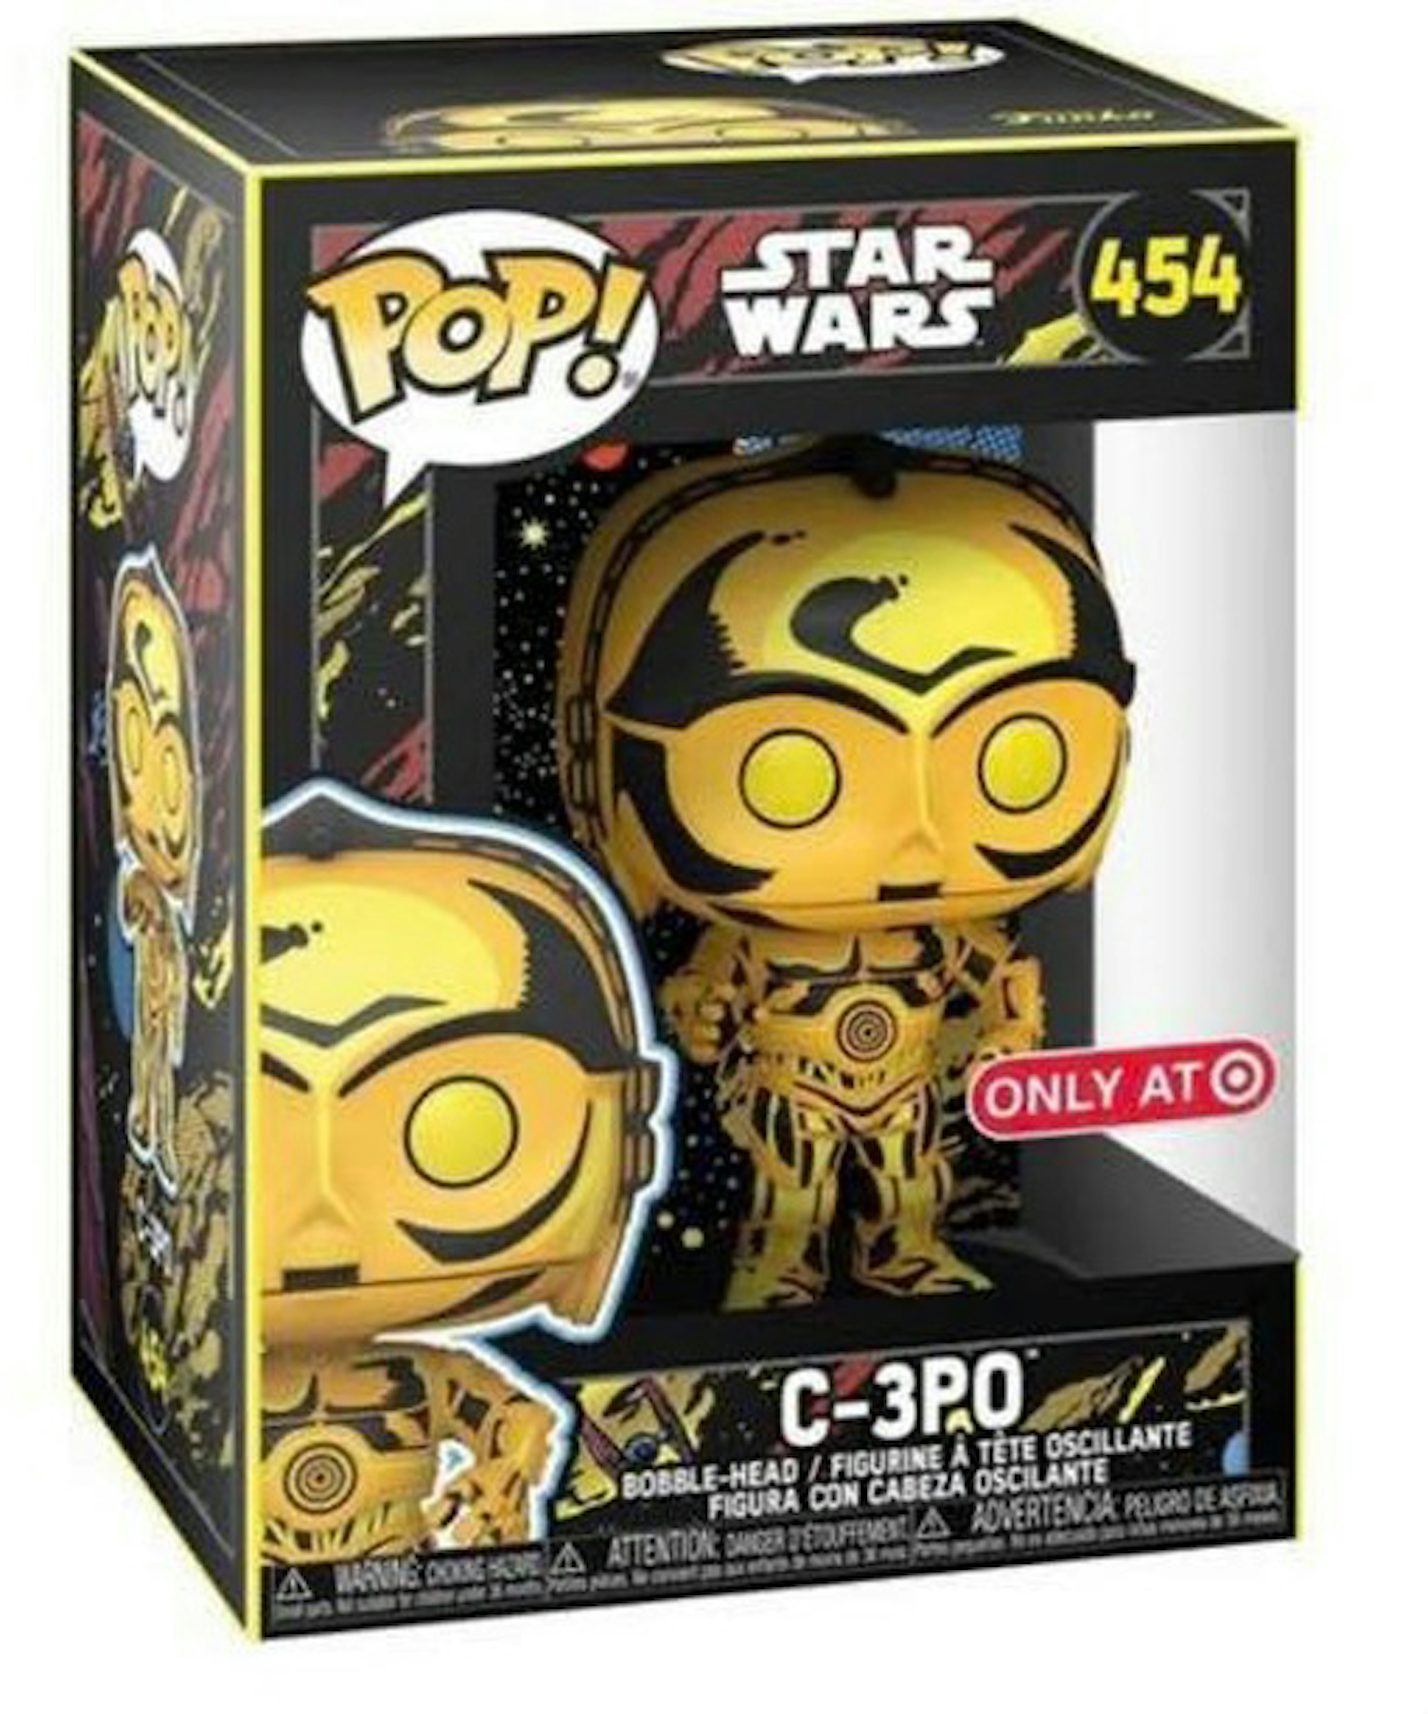 https://images.stockx.com/images/Funko-Pop-Star-Wars-C-3PO-Retro-Series-Target-Exclusive-Figure-454.jpg?fit=fill&bg=FFFFFF&w=1200&h=857&fm=jpg&auto=compress&dpr=2&trim=color&updated_at=1623430485&q=60